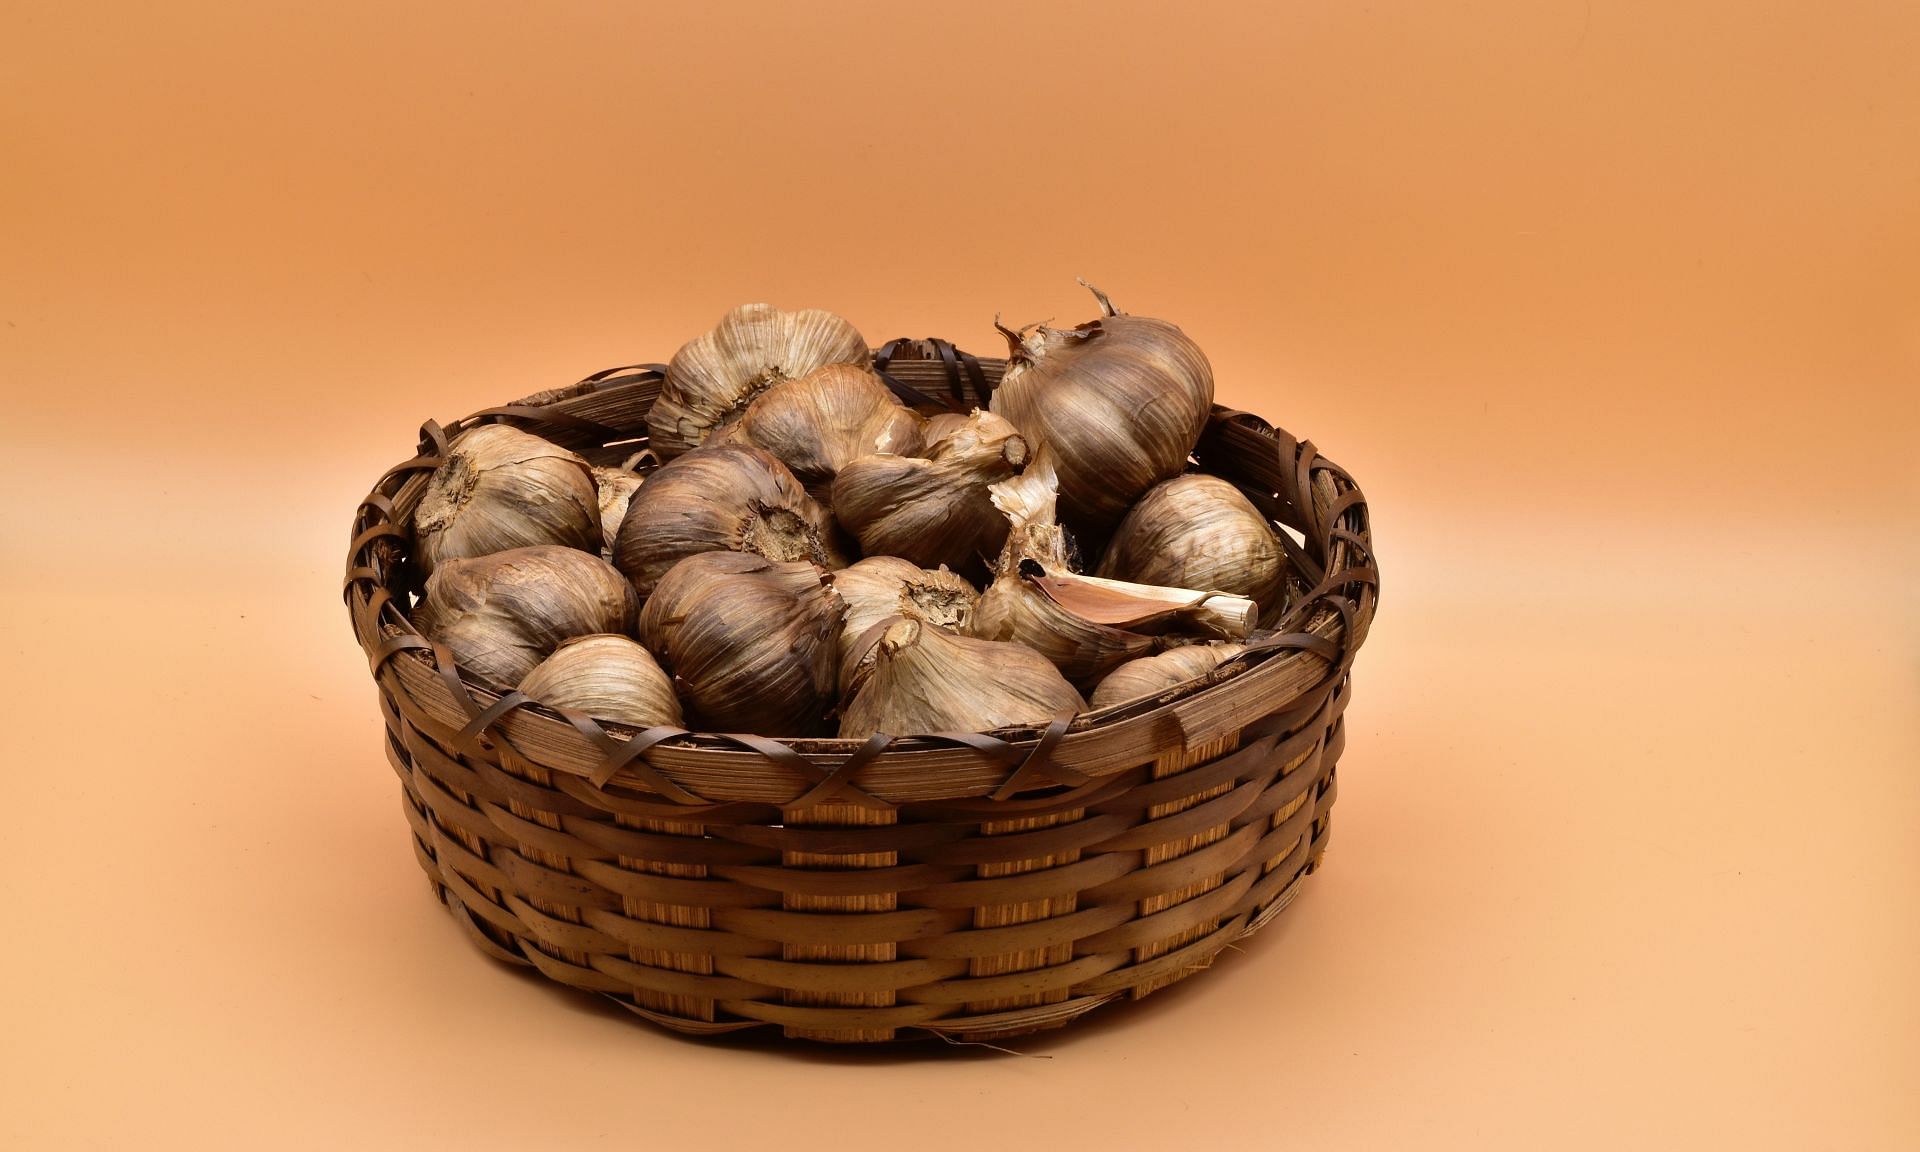 Benefits of black garlic - It boosts immunity. (Image via Unsplash/ Geoff Oliver)